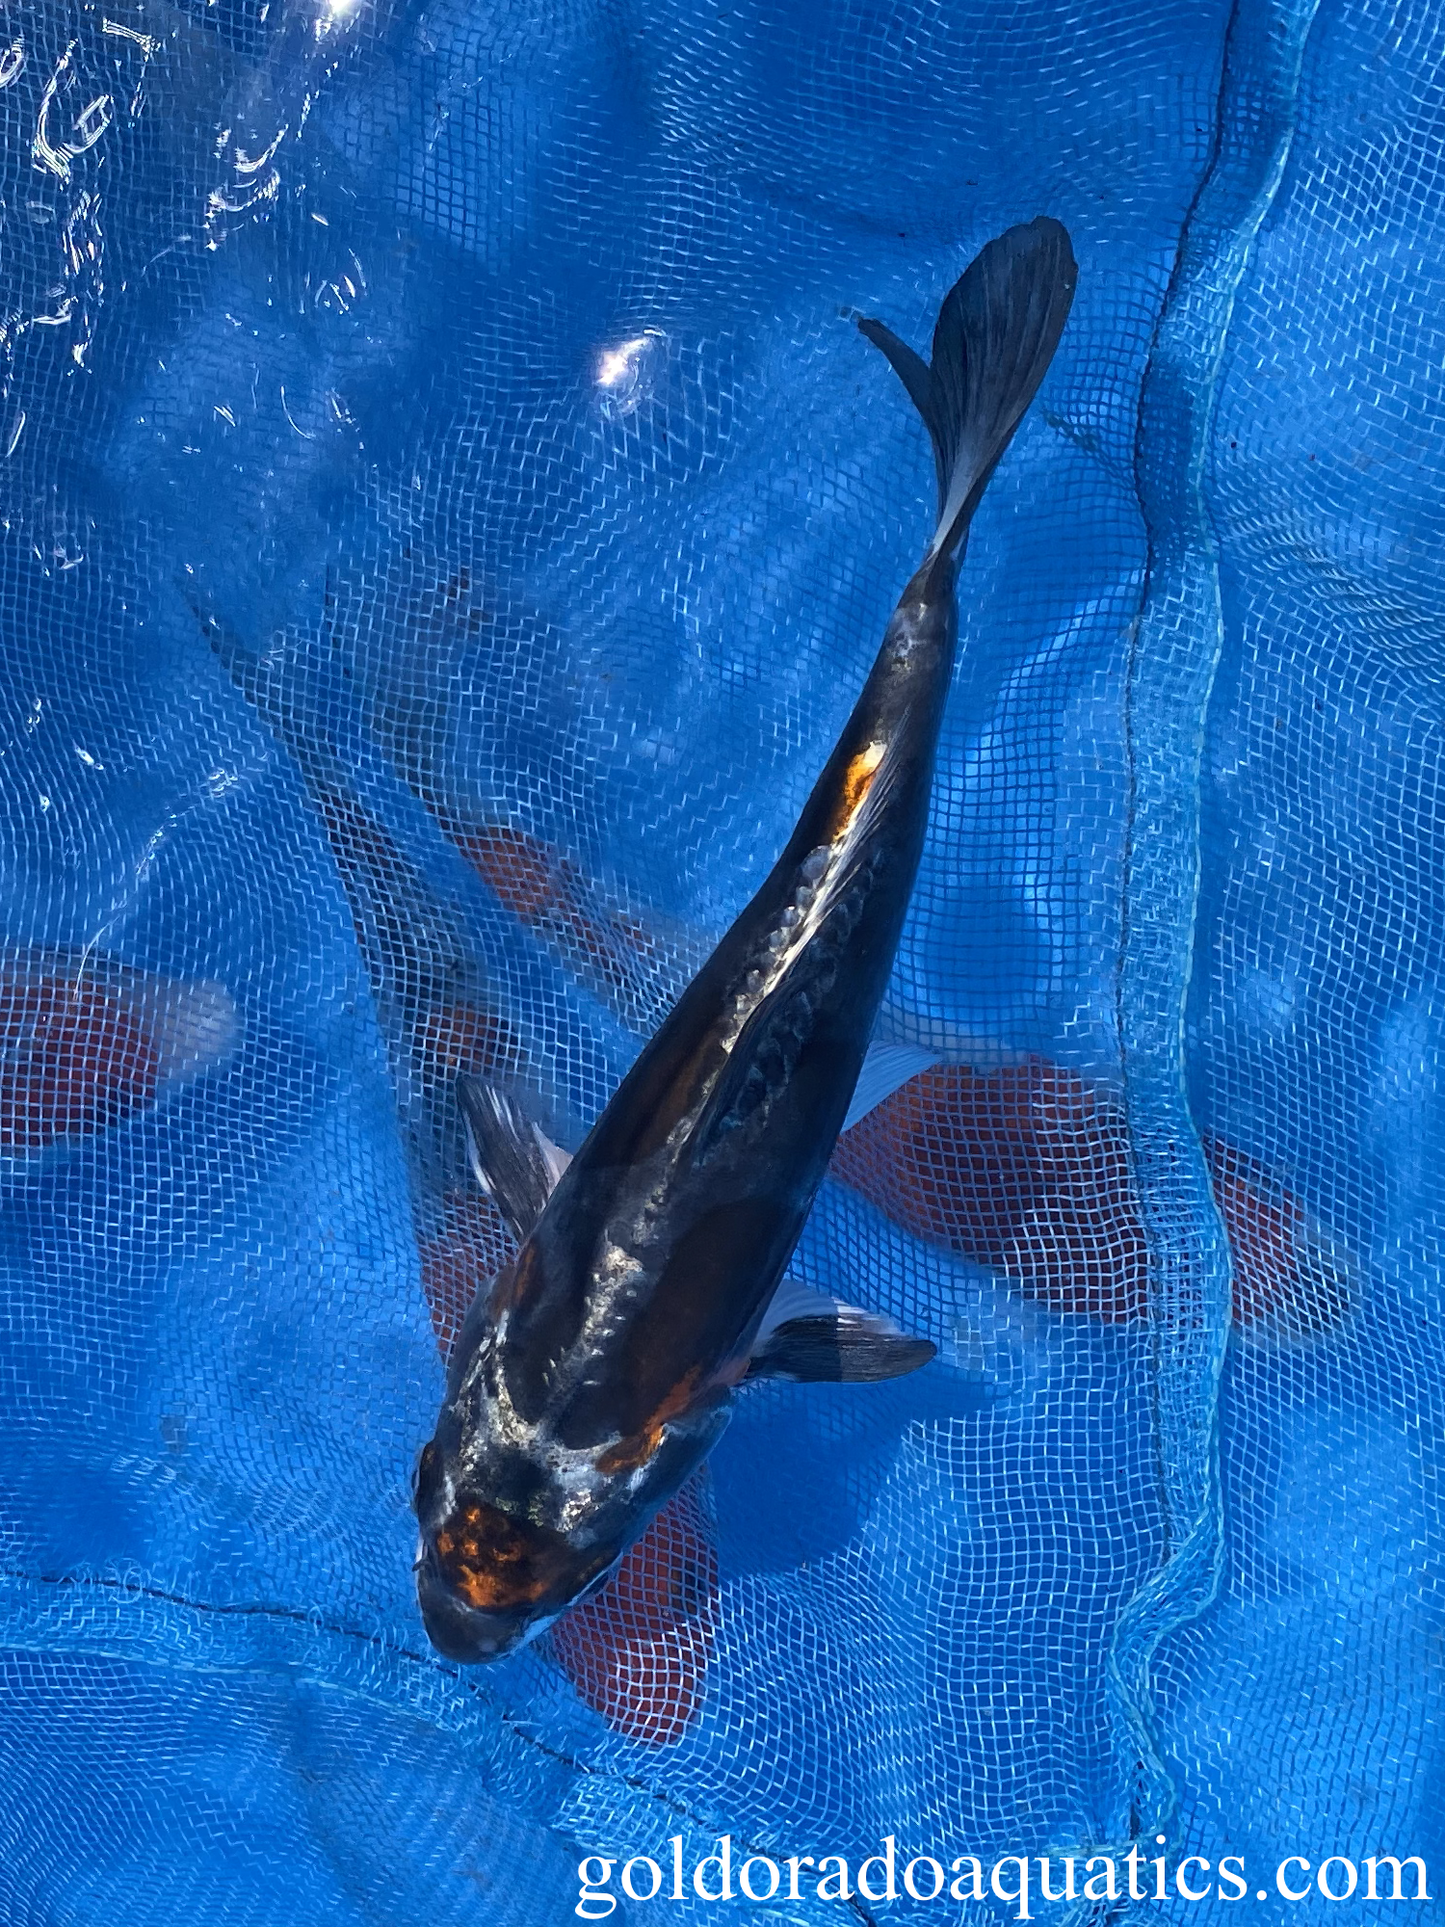 Kin Kikokuryu Koi Fish with deep black color.